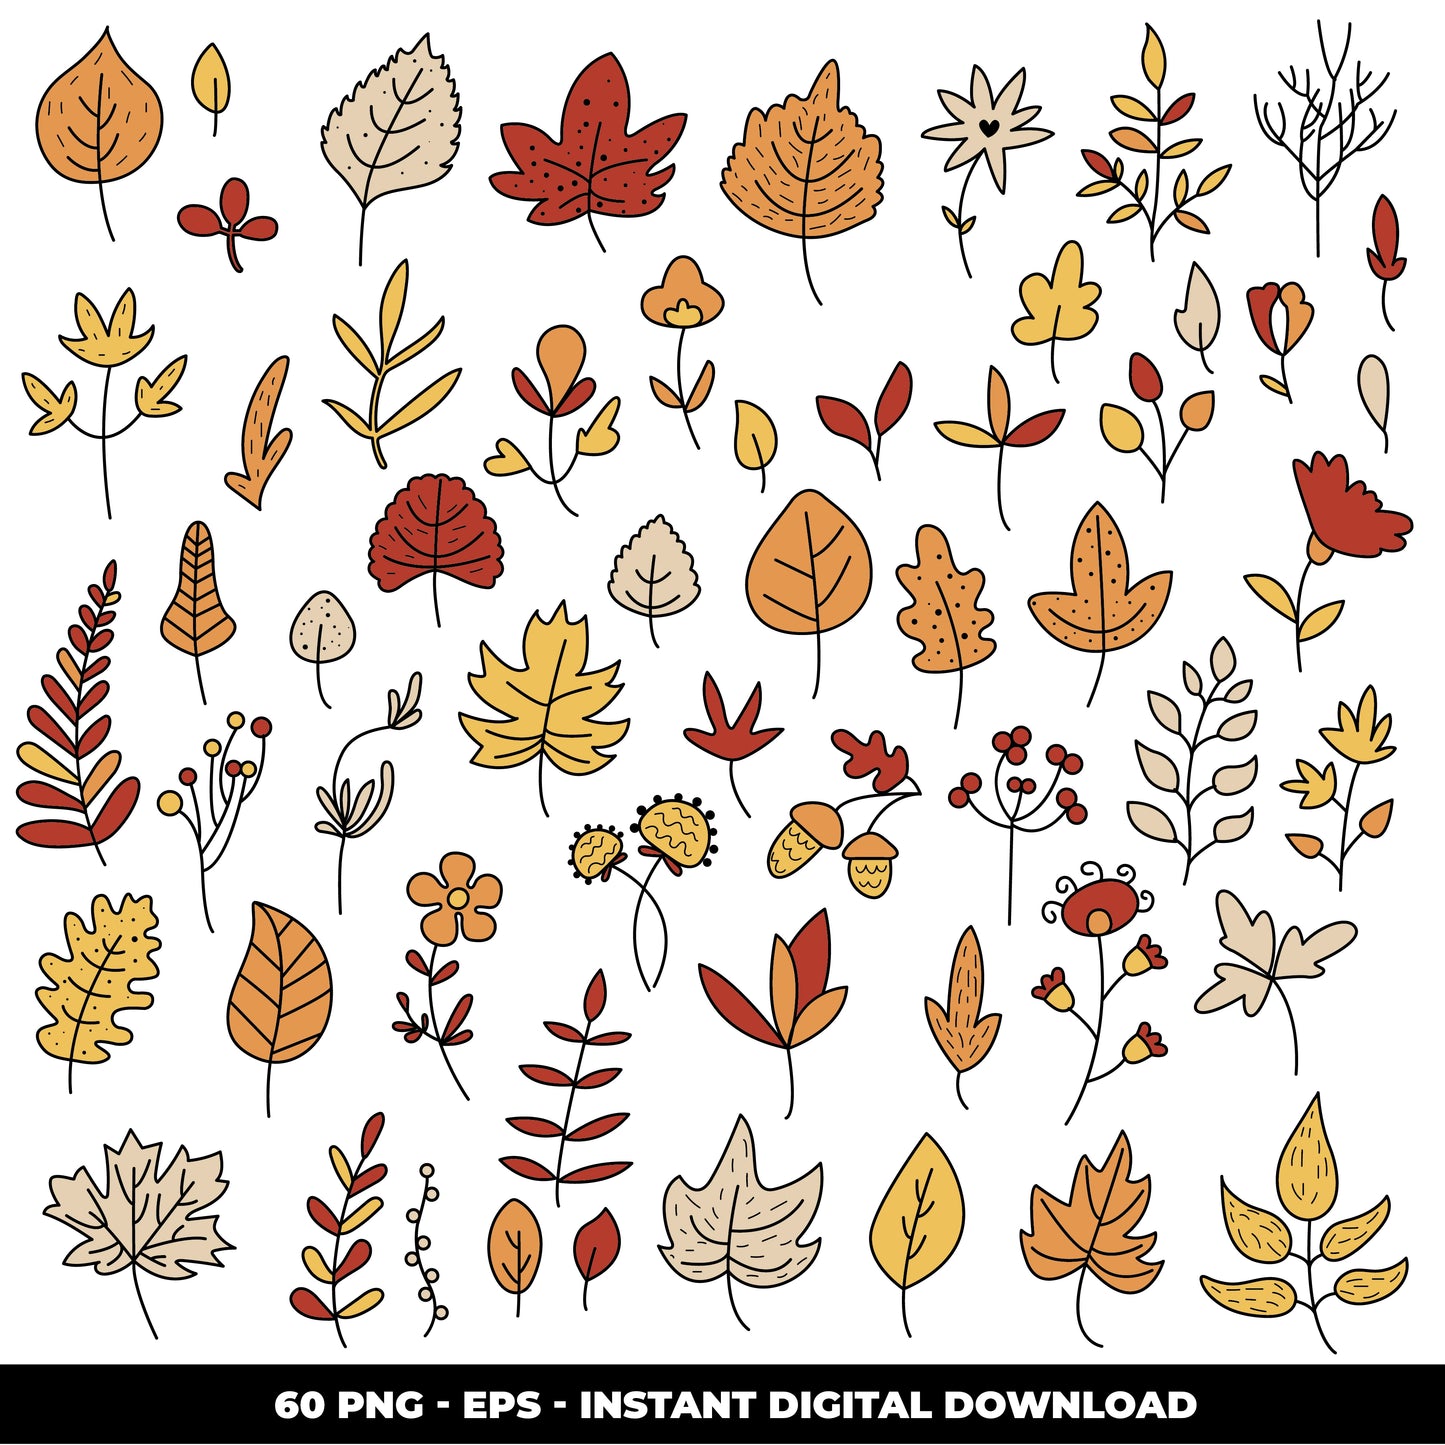 COD826 - Leaves clipart, Plant eps, Paper Leaves, Leaf Templates, Wreath, Cut Files, Leaf Clipart